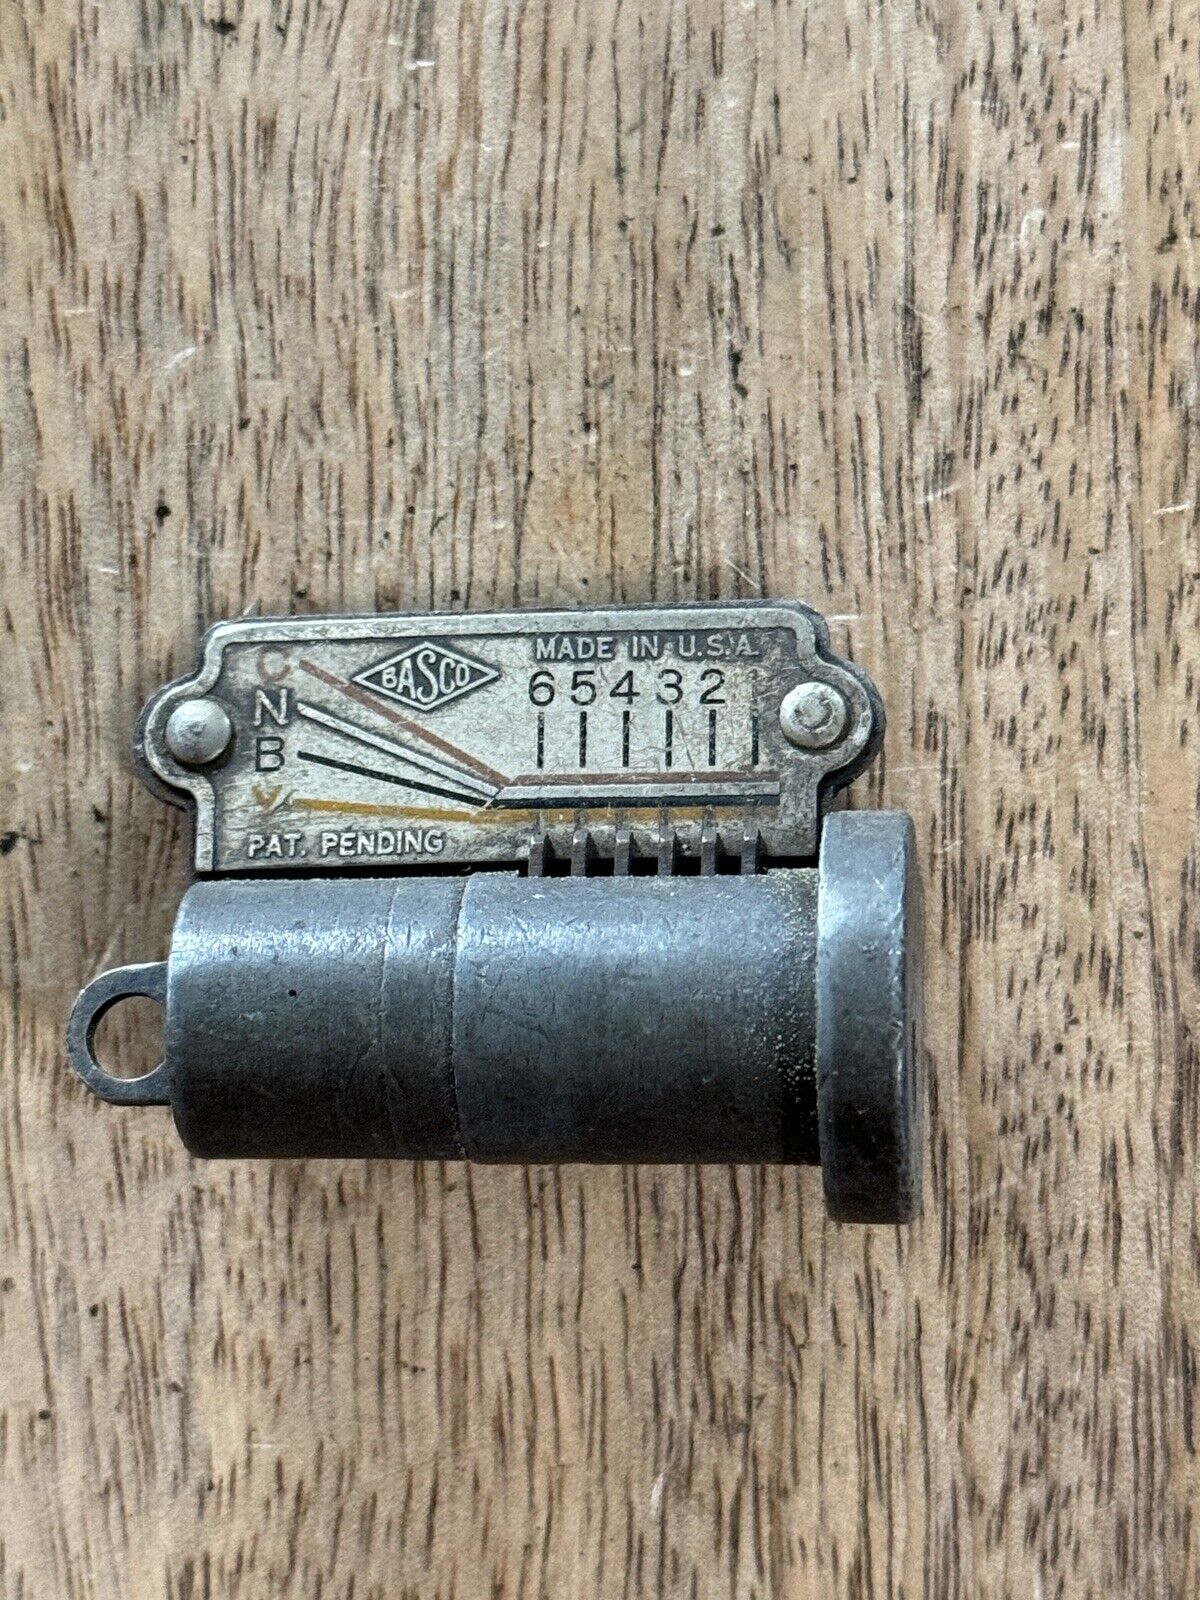 Vintage Antique Old Basco Auto Key Decoder